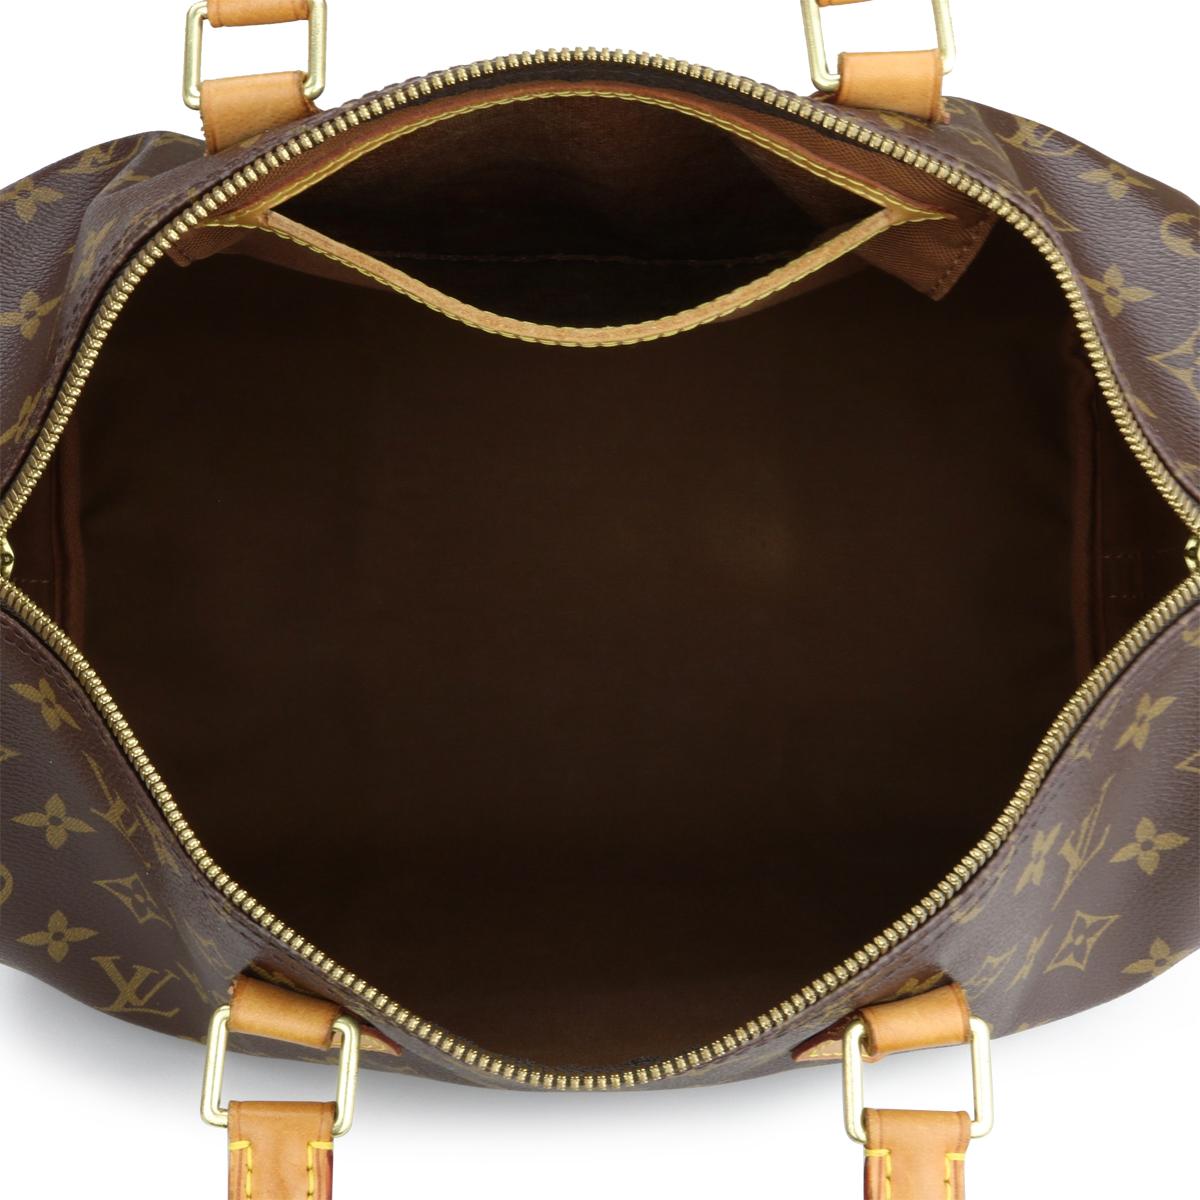 Louis Vuitton Speedy Bandoulière 35 Bag in Monogram 2011 13